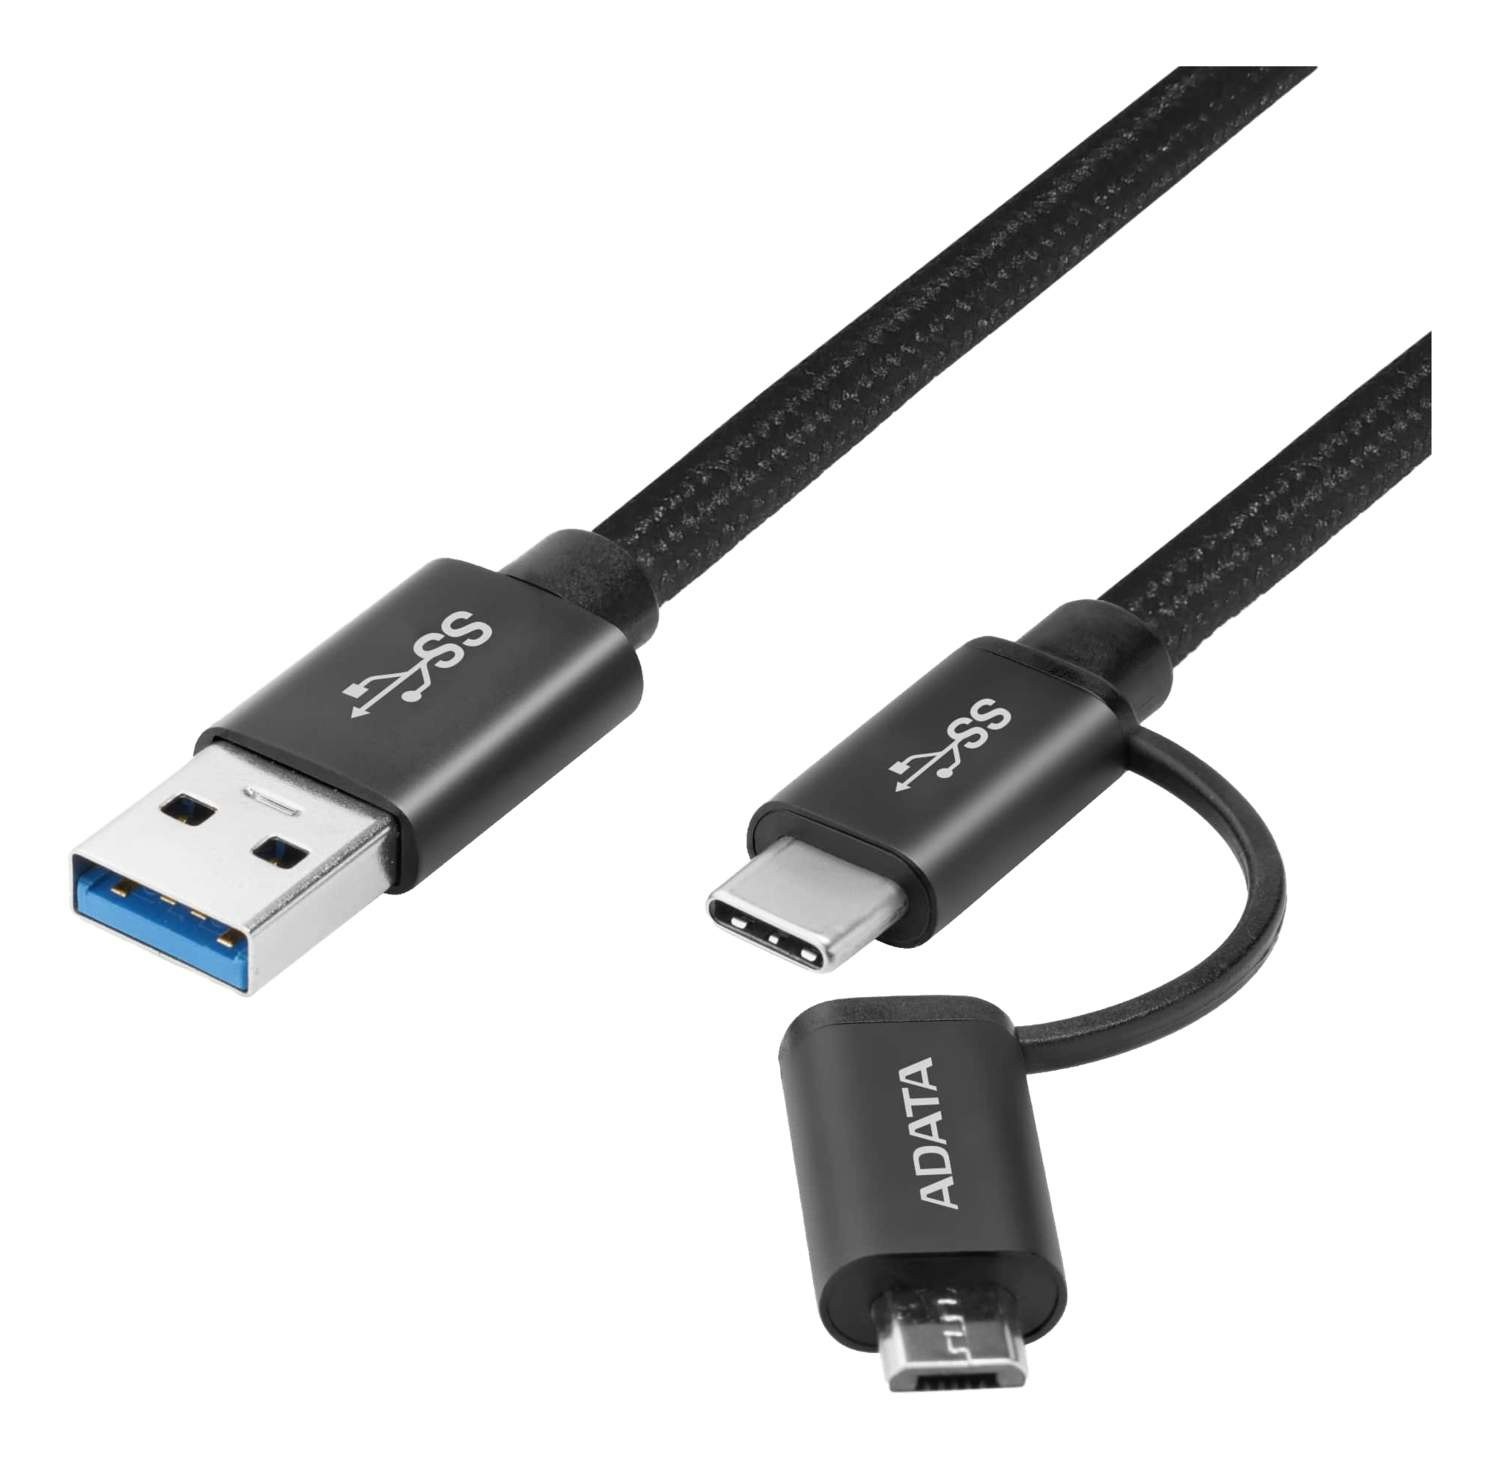 ADATA USB-C/Micro USB 3.1  kabel, 1m tygbeklädd kabel